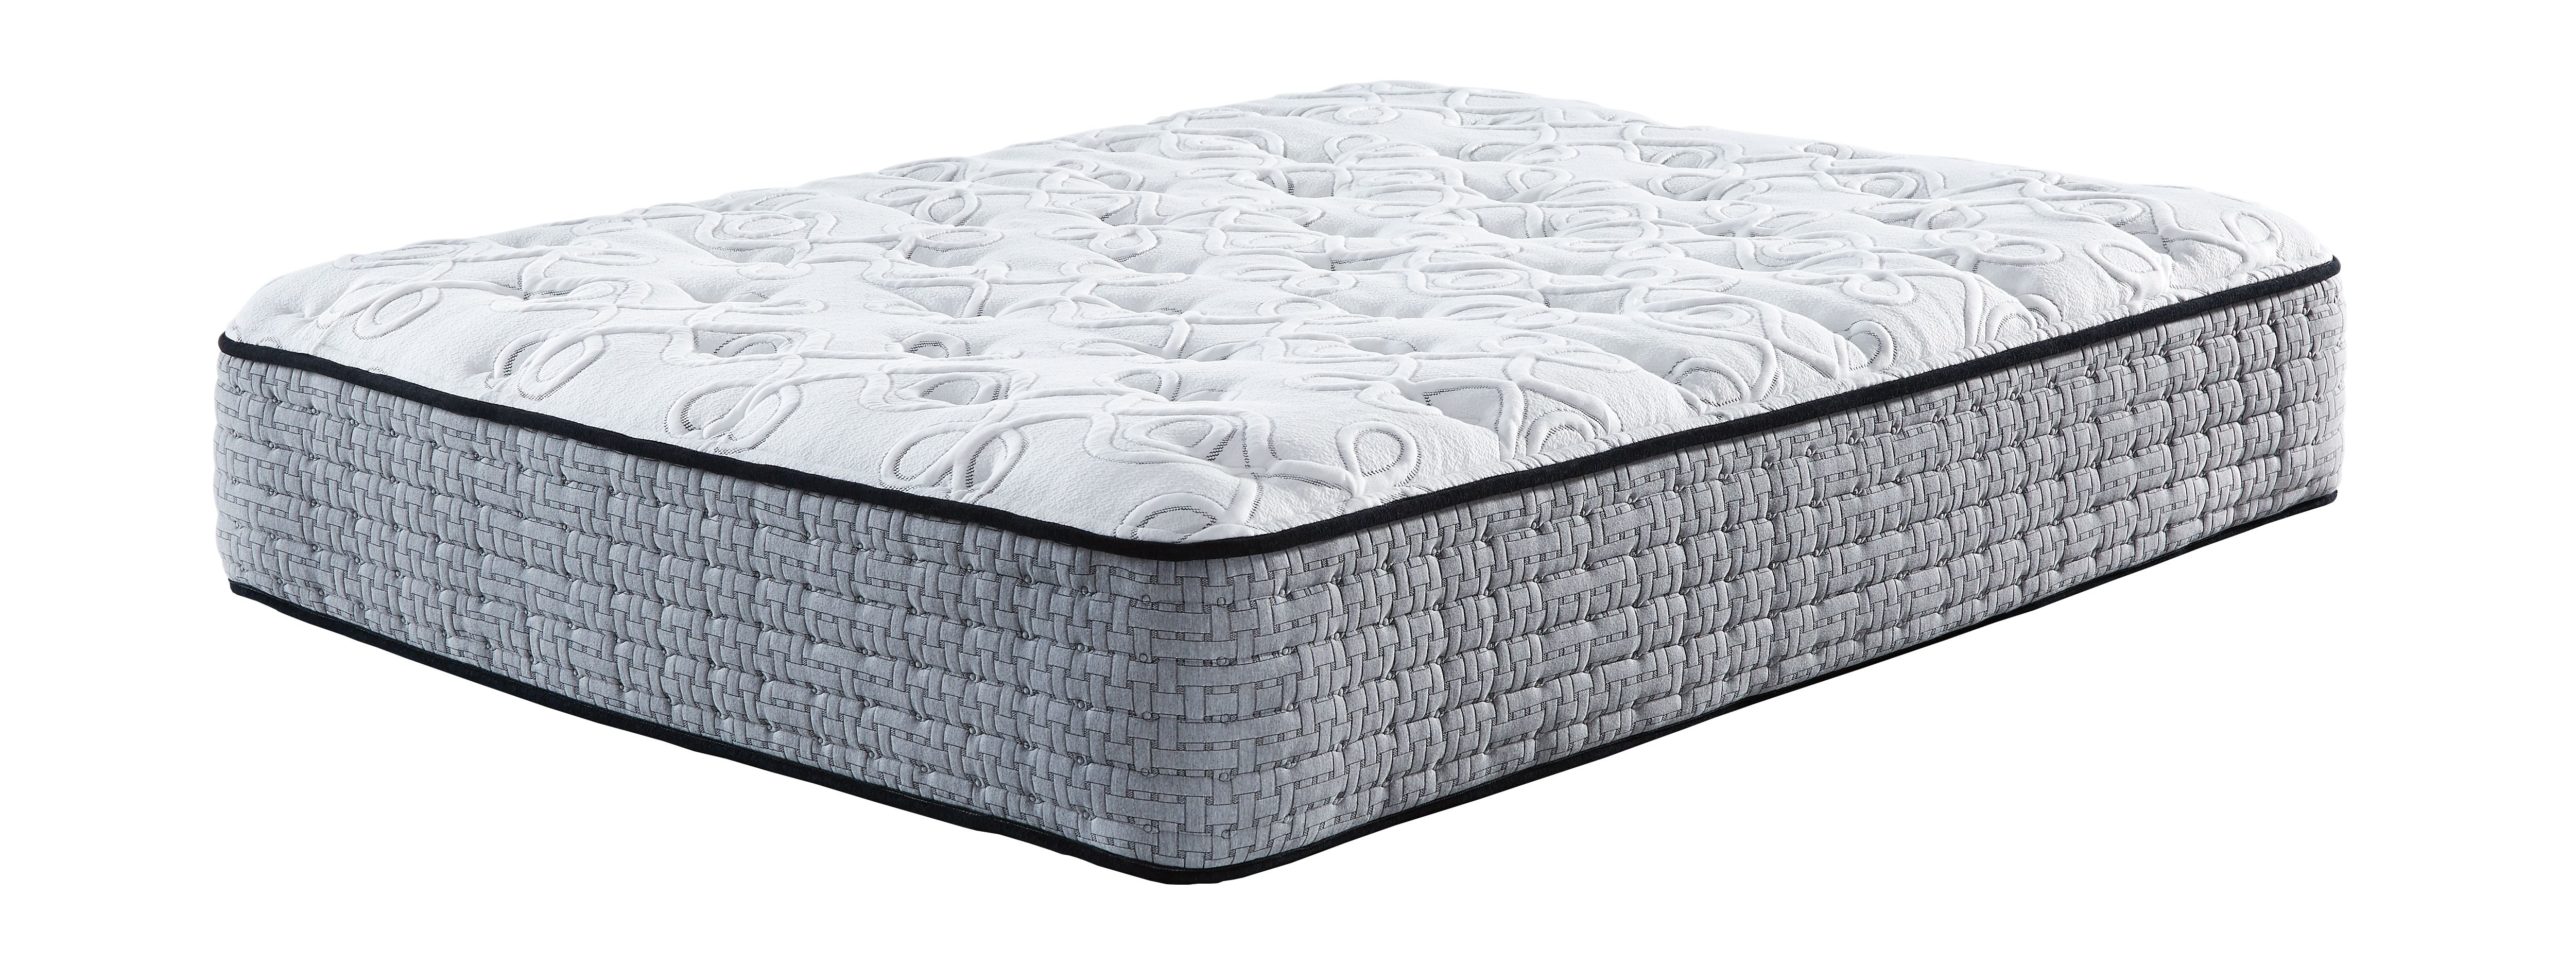 sleepys queen mattress mt-slp7q-01